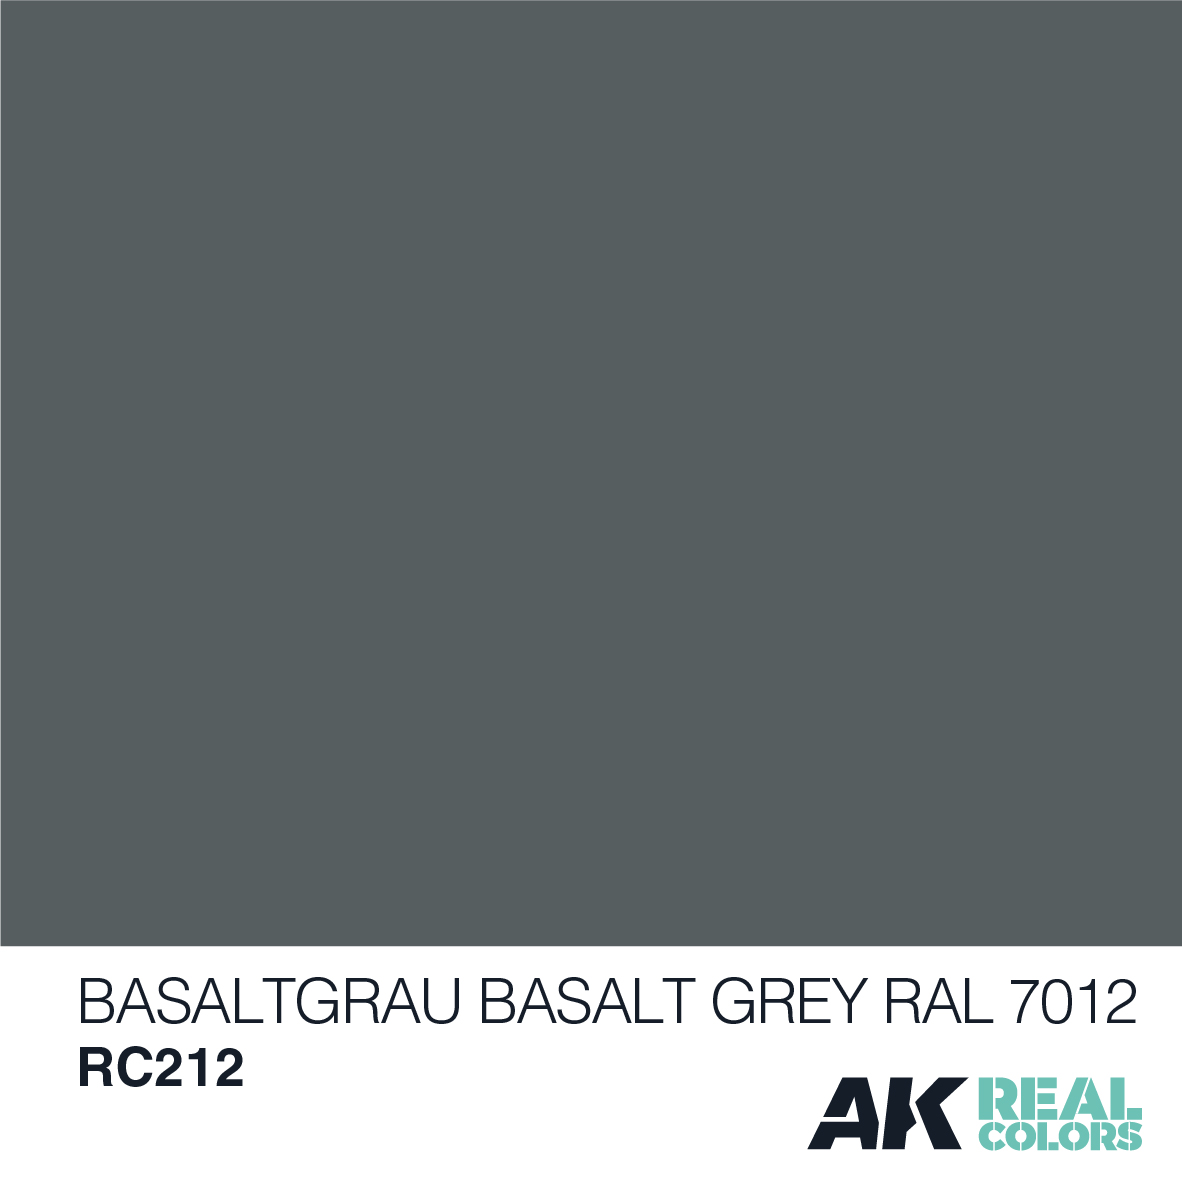 Basaltgrau-Basalt Grey RAL 7012